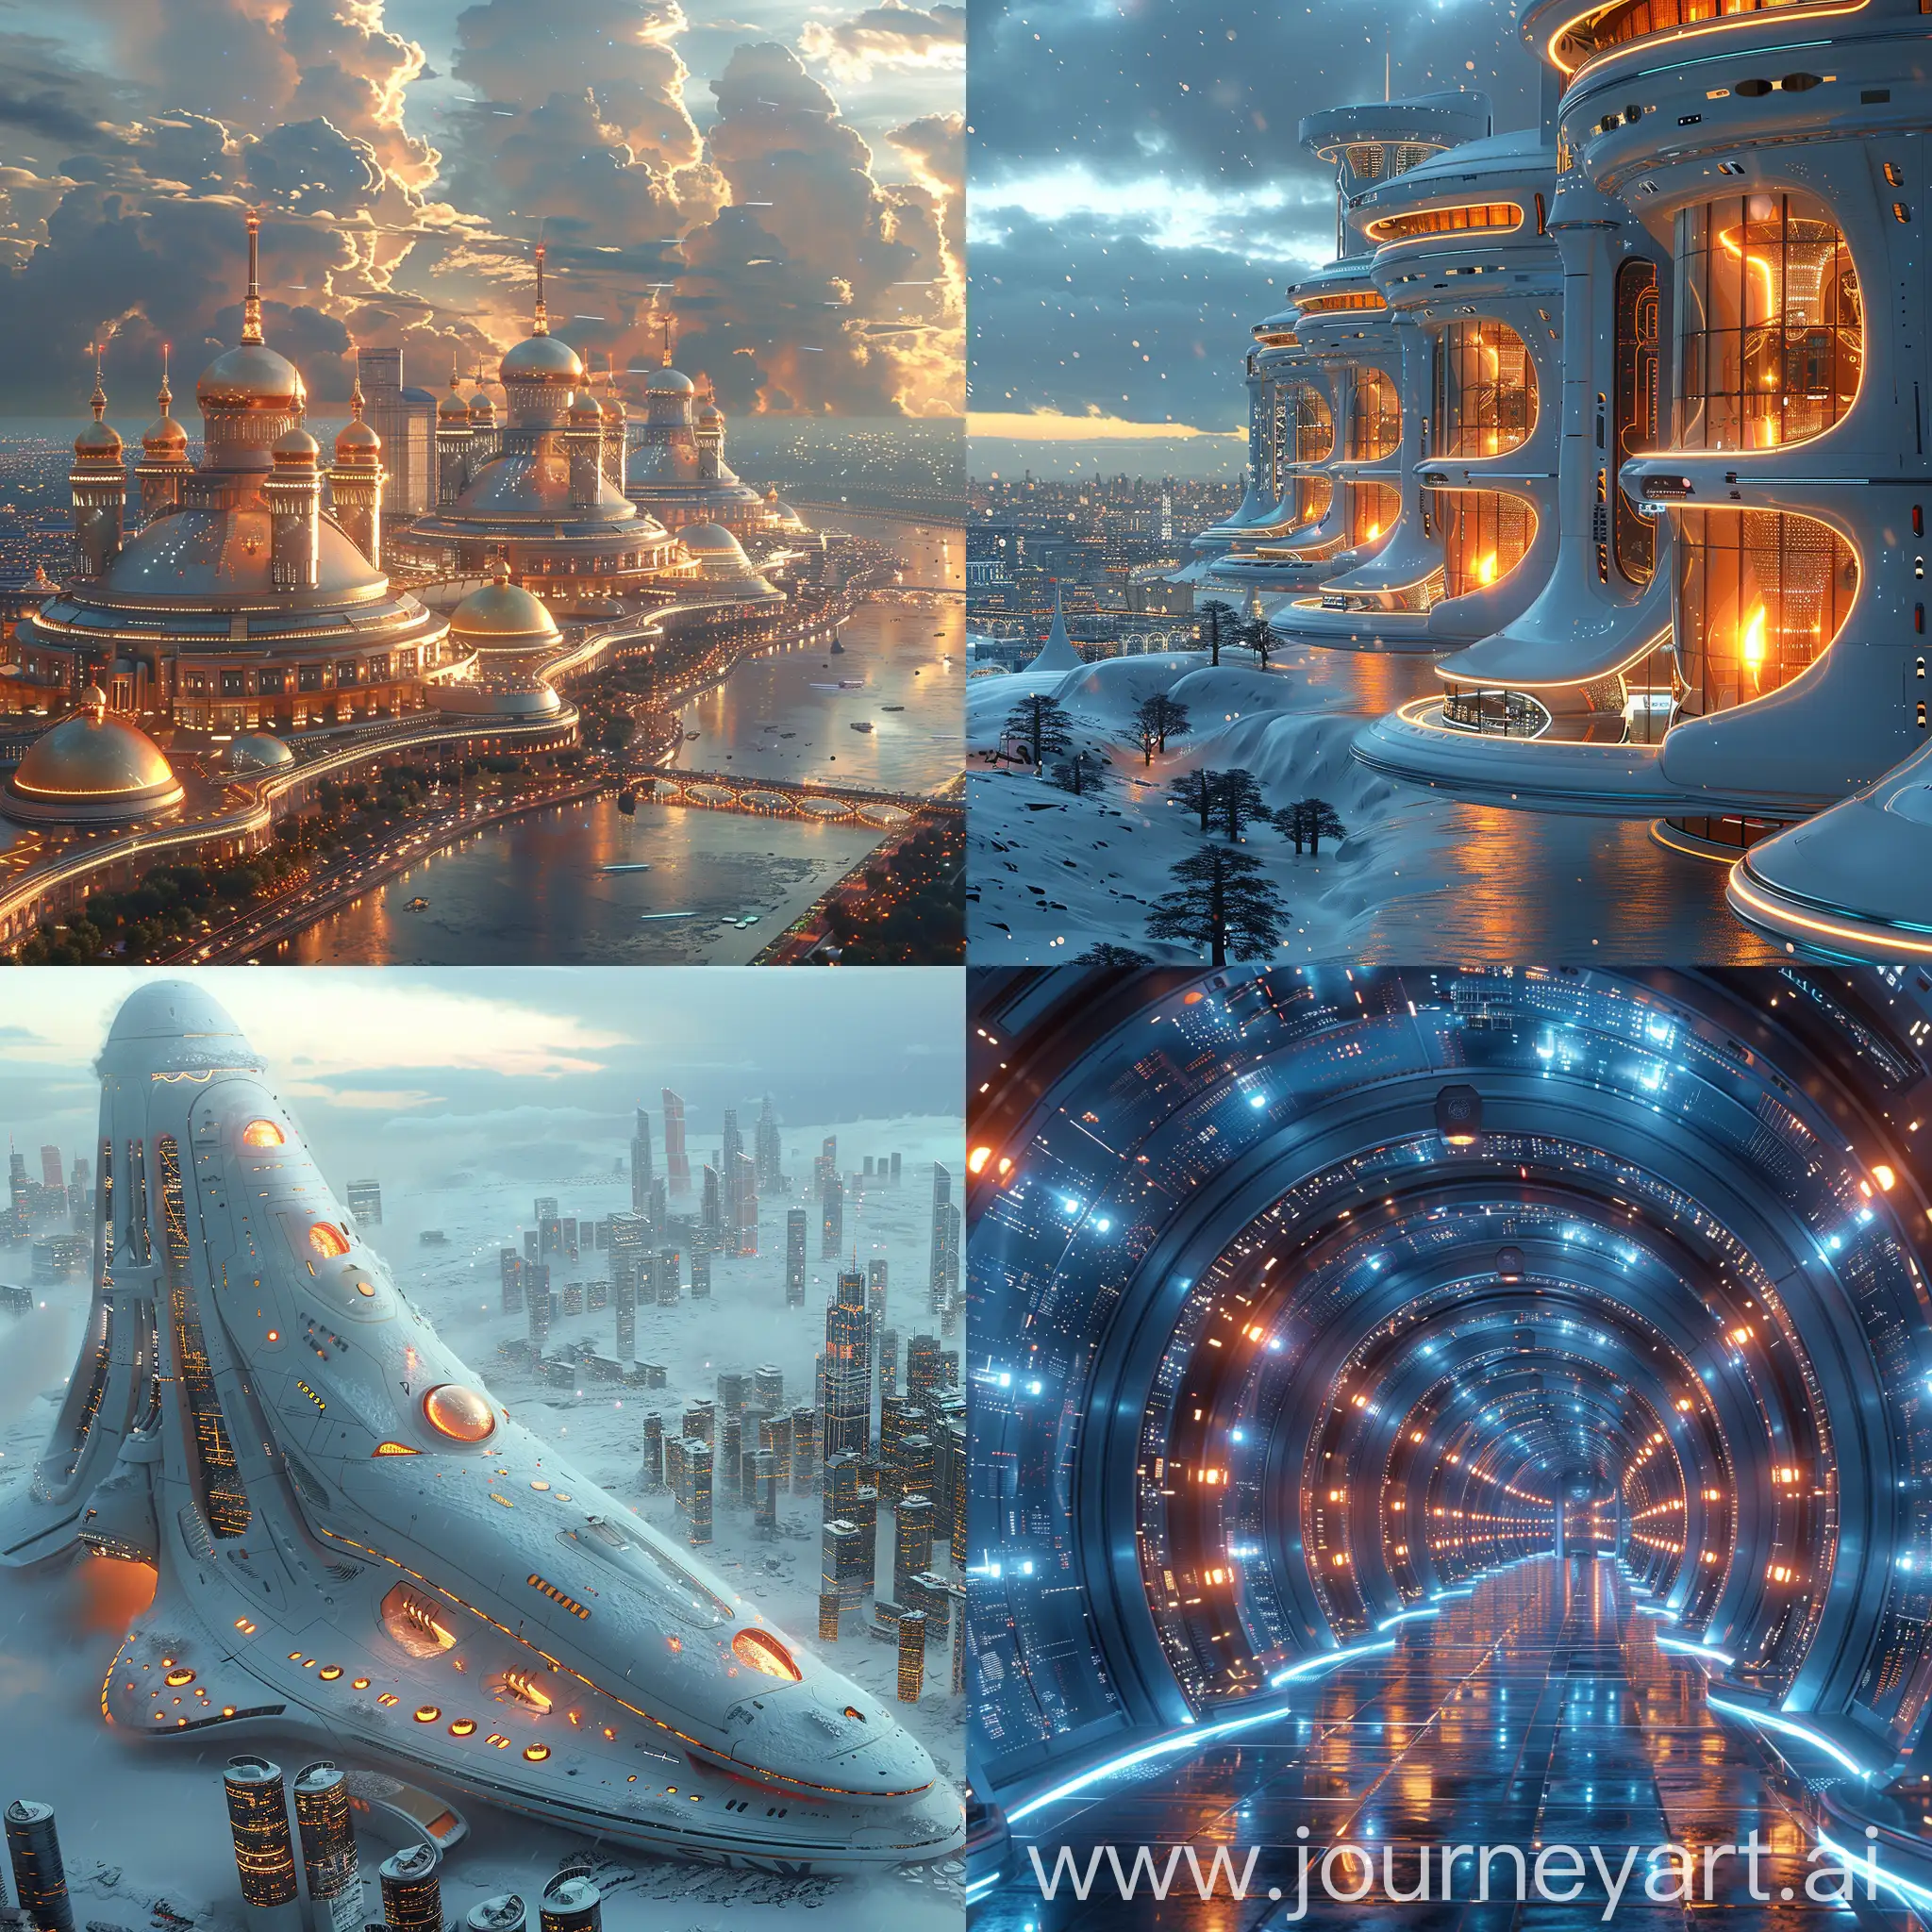 Futuristic-Moscow-Cybernetics-in-UltraModern-HighTech-Style